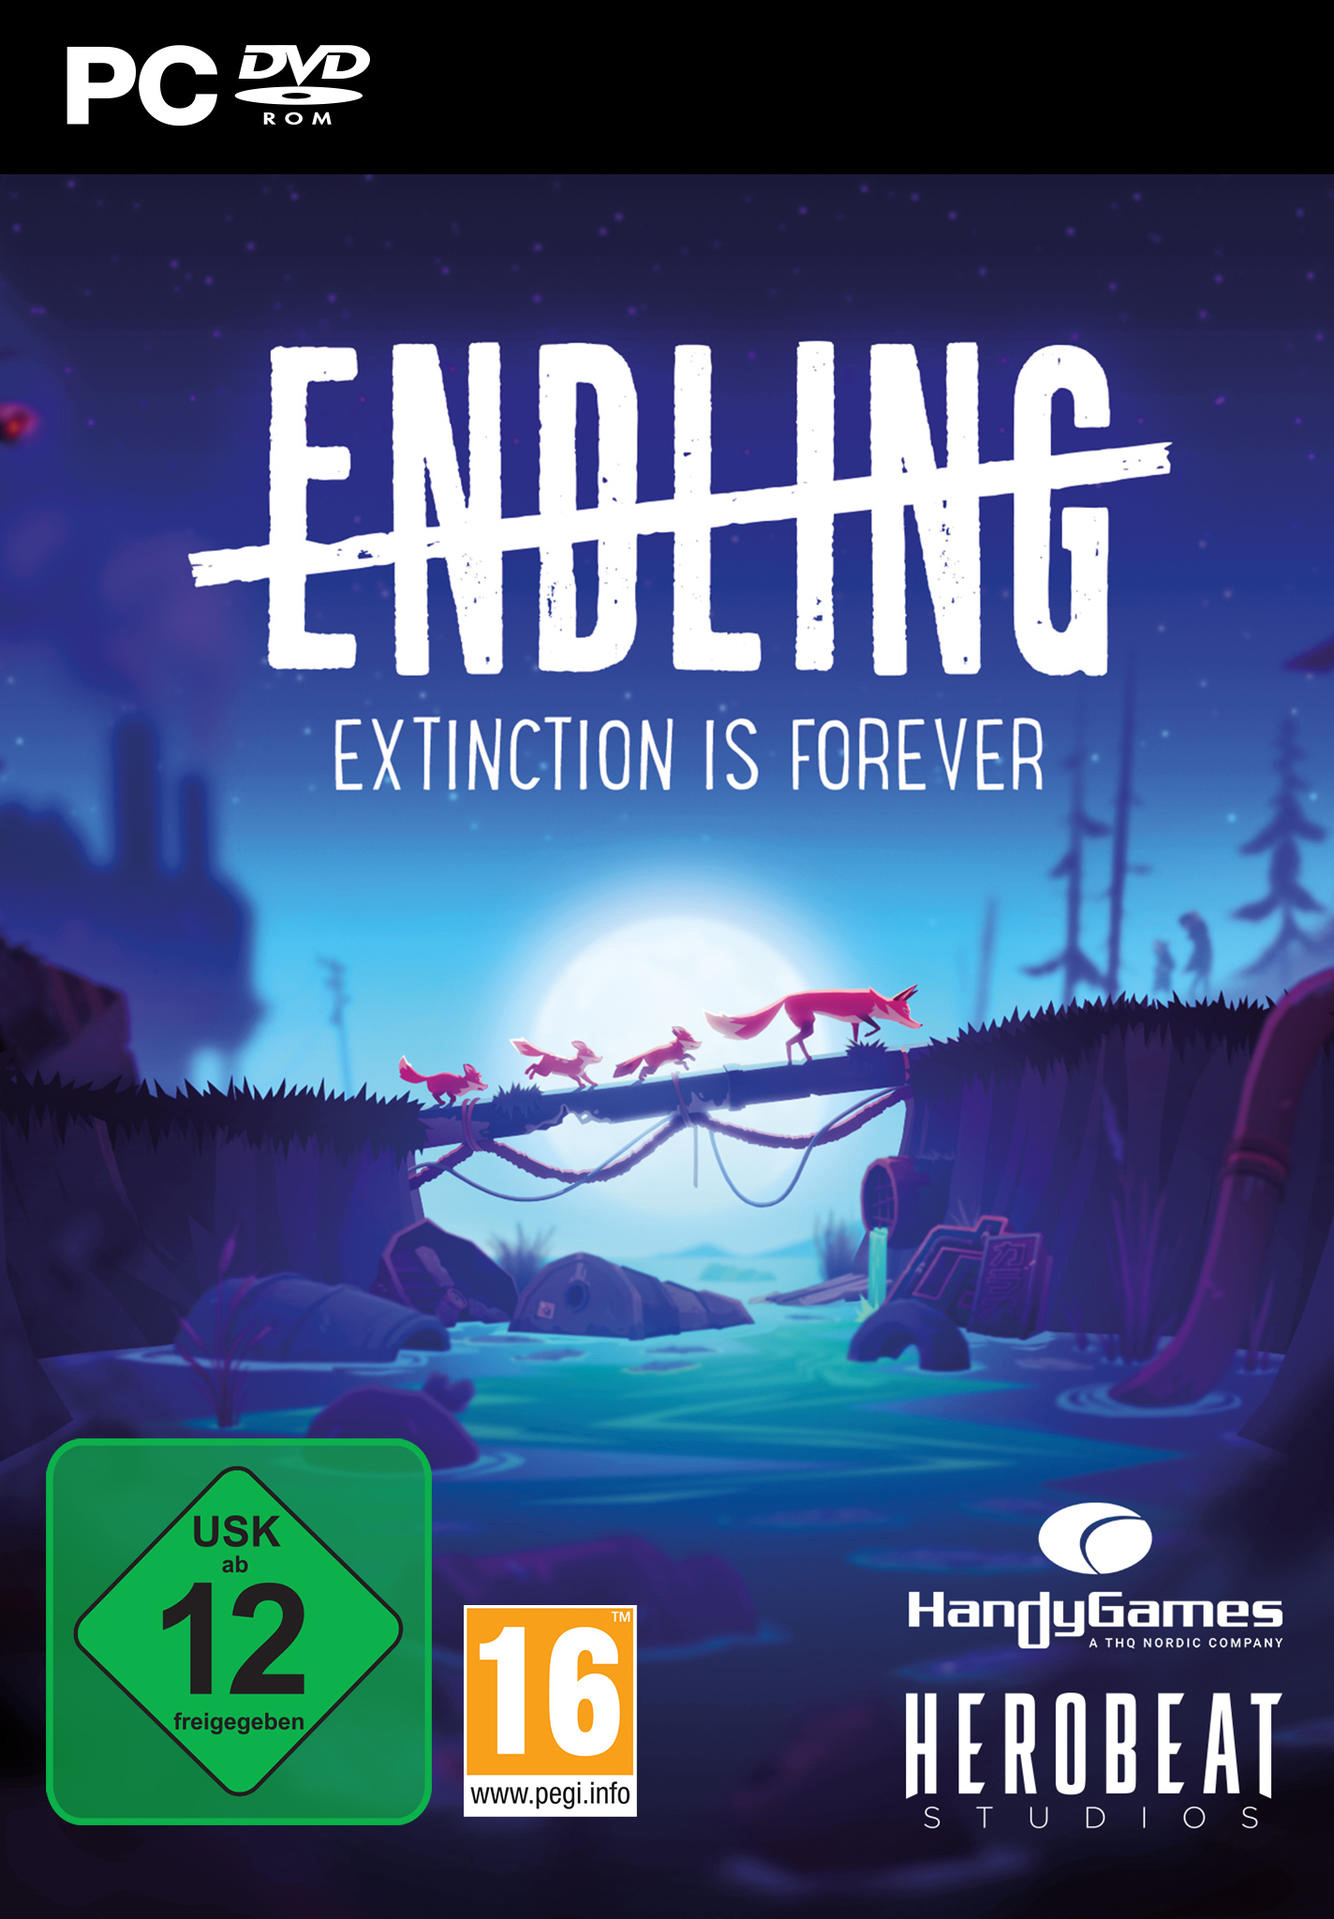 Endling - Extinction is Forever - [PC